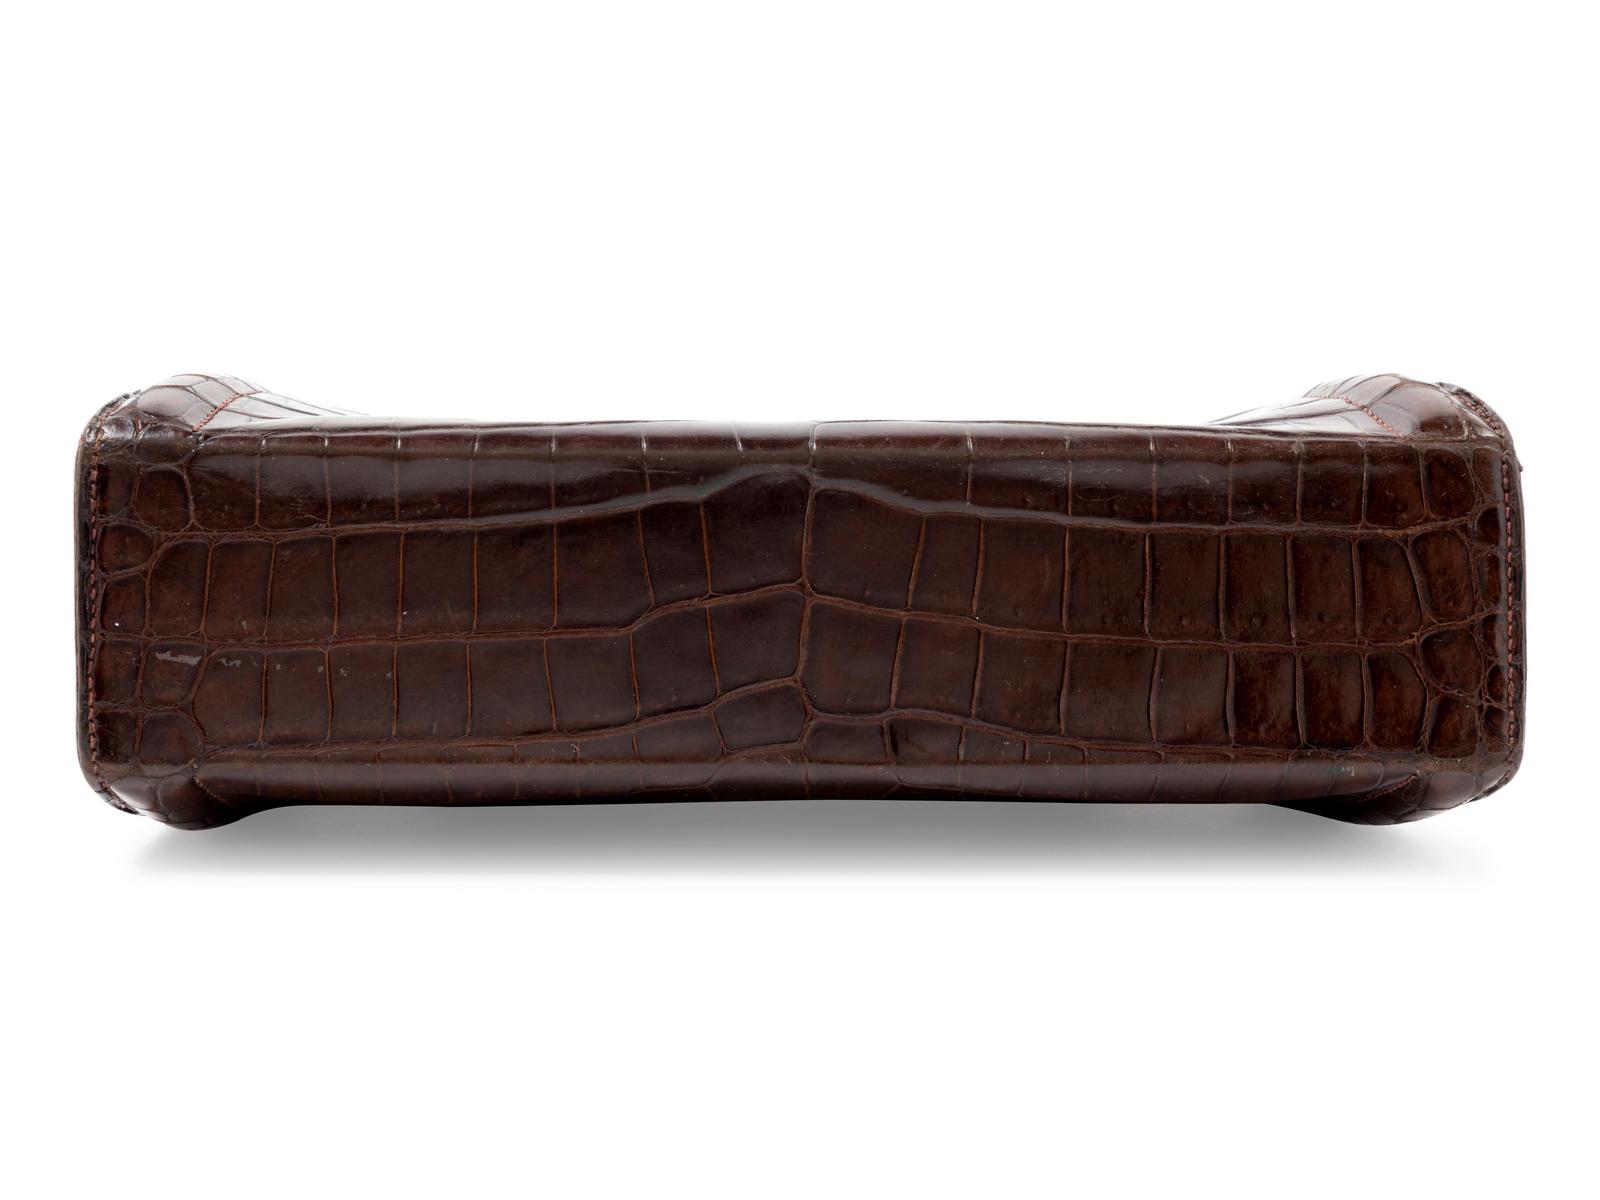 Sold at Auction: Designer Brown Crocodile Leather Backpack